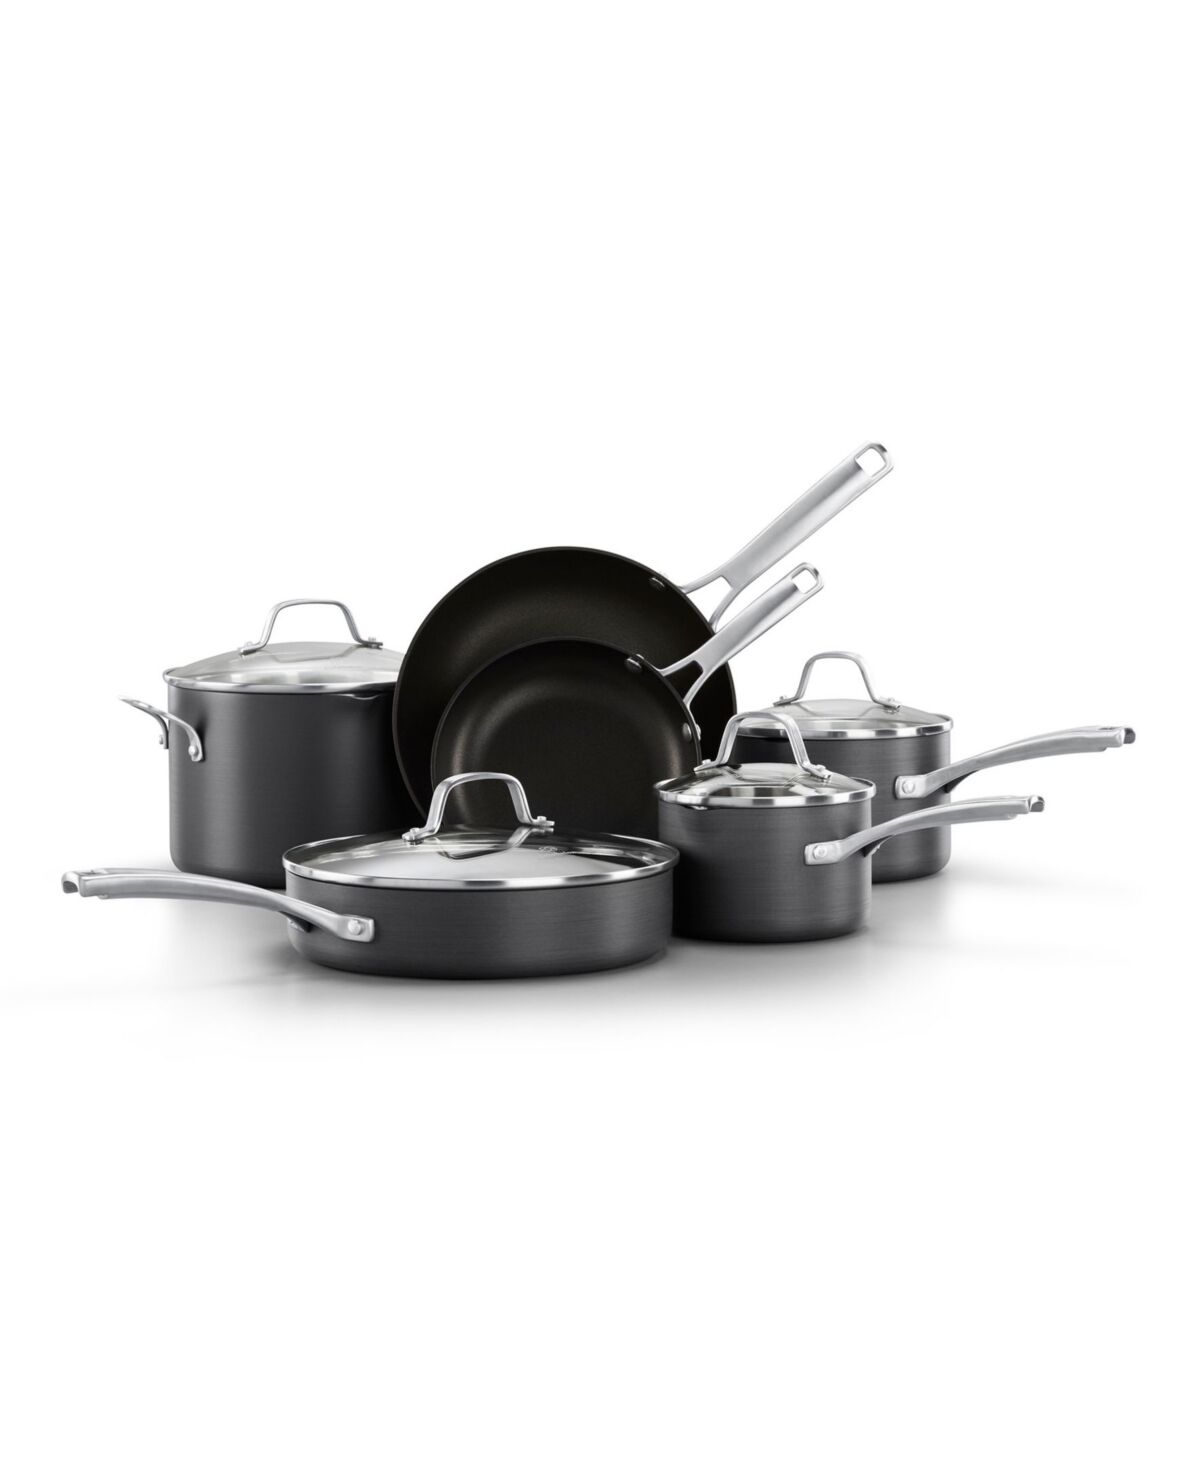 Calphalon Classic 10-Pc. Nonstick Cookware Set - Black/stainless Steel